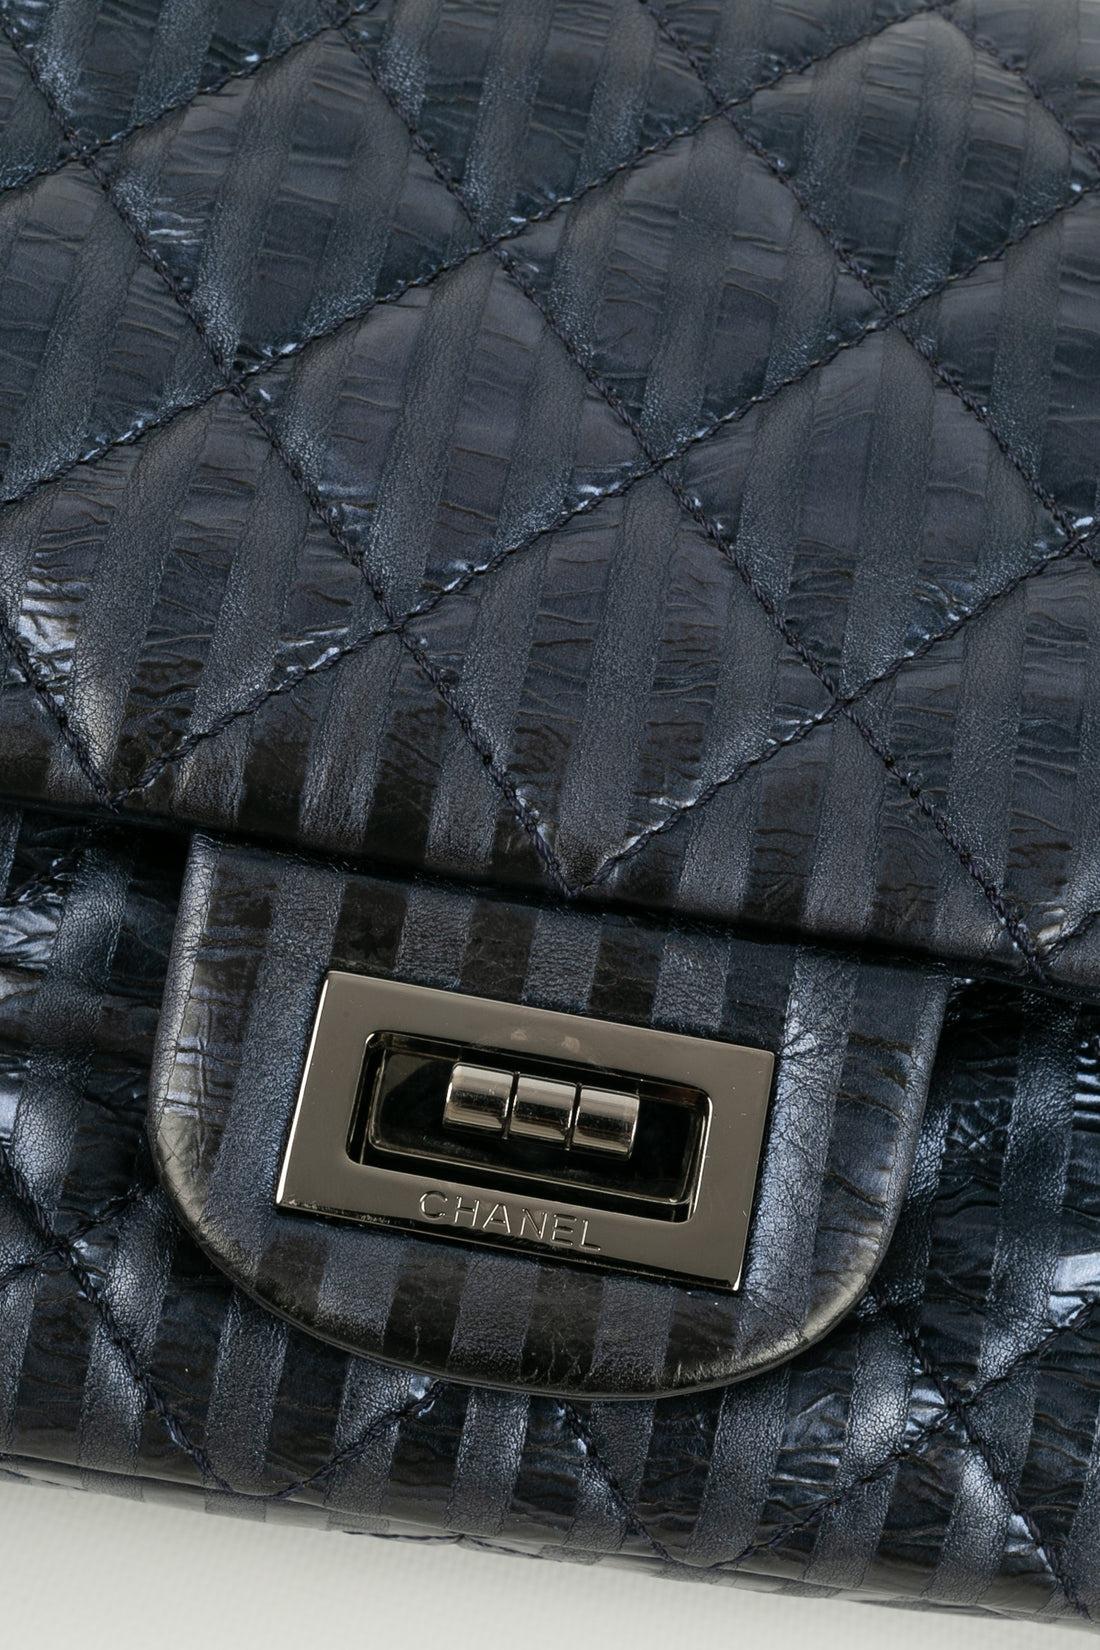 Chanel Blue Metallic Leather Bag, 2008/09 3